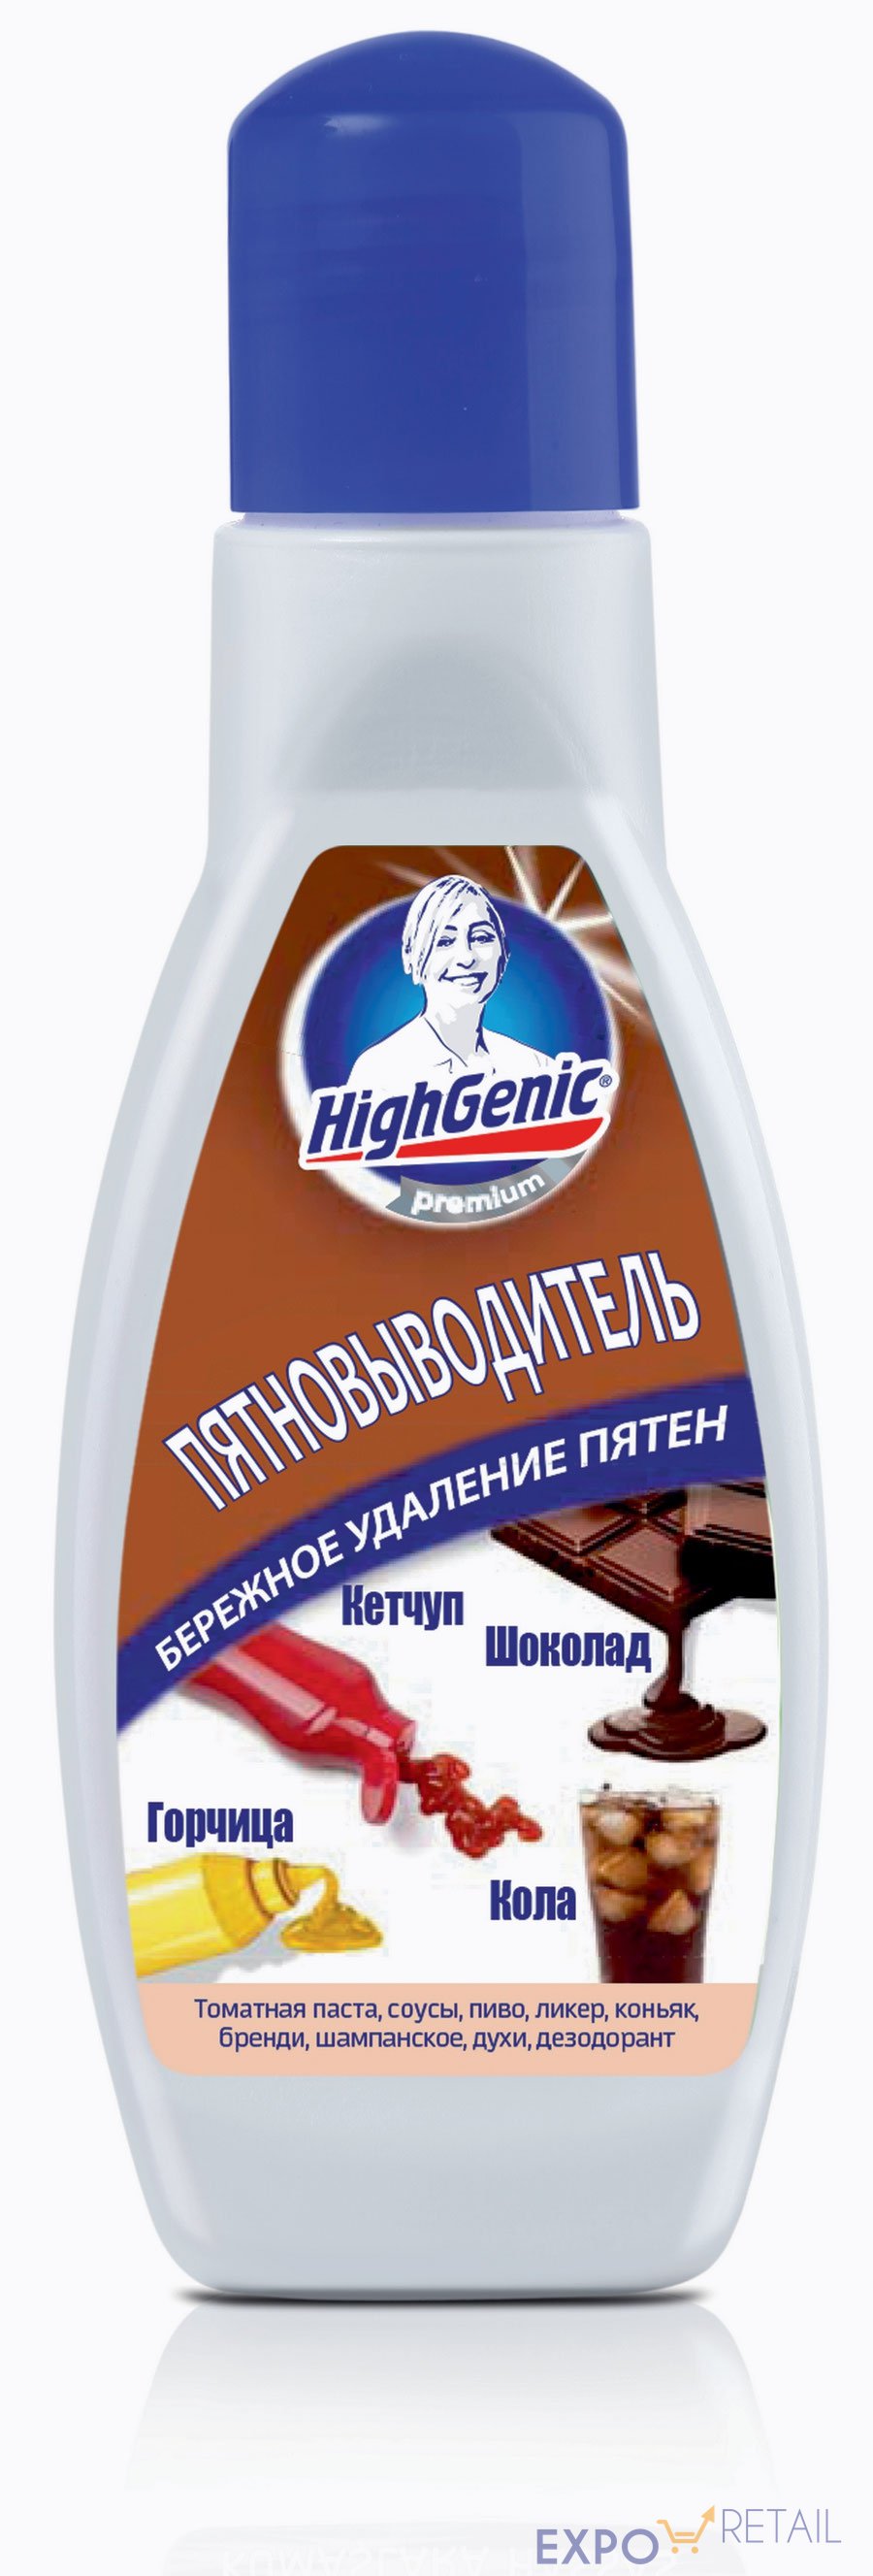 HighGenic Premium Пятновыводитель: кетчуп, горчица, шоколад, кола